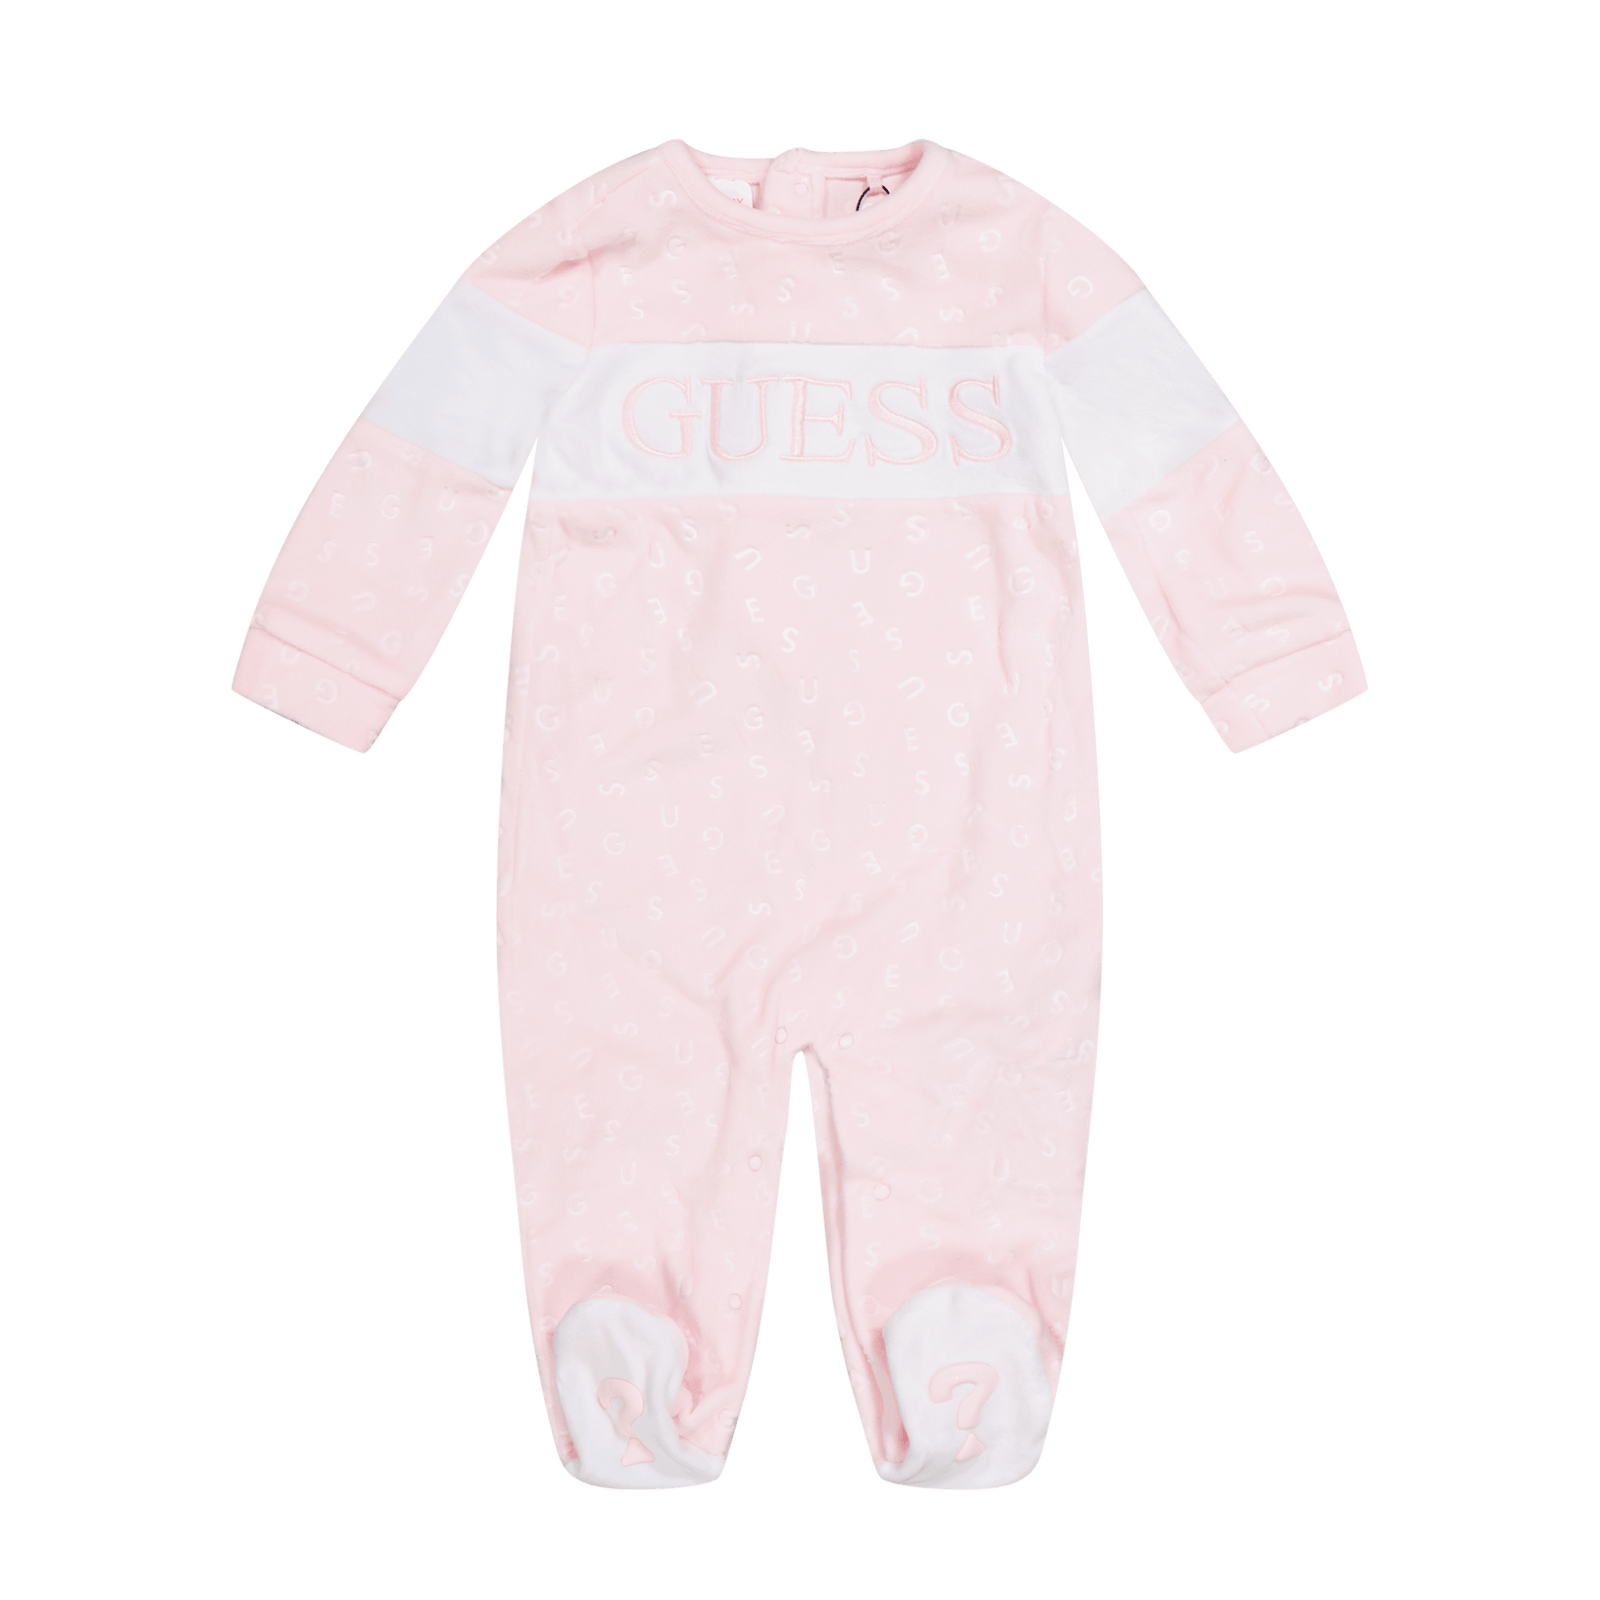 Baby Unisex Bodysuit Light Pink